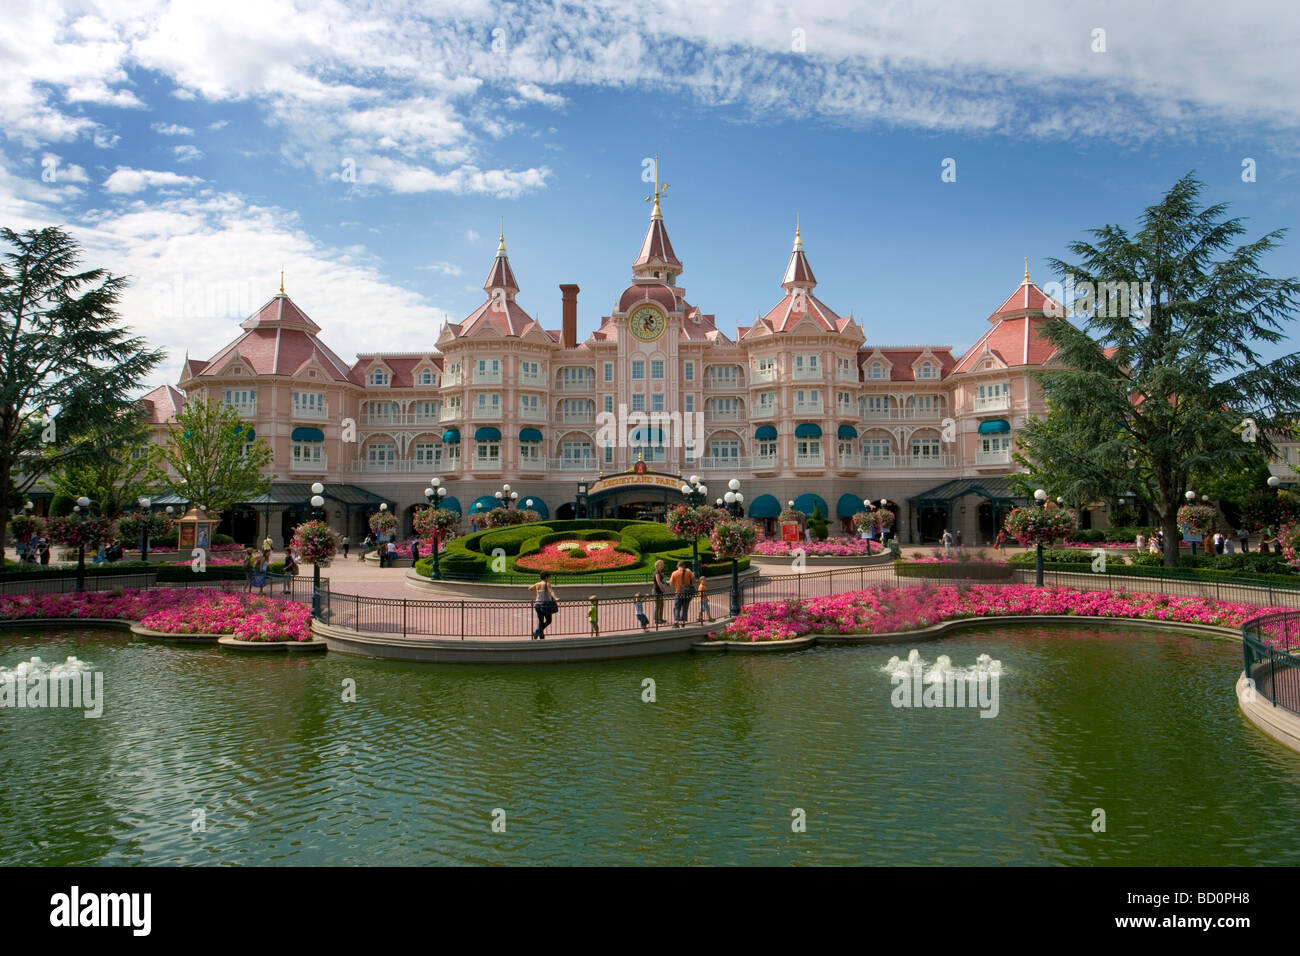 Entrance to Disney Park, Disneyland Paris, France Stock Photo